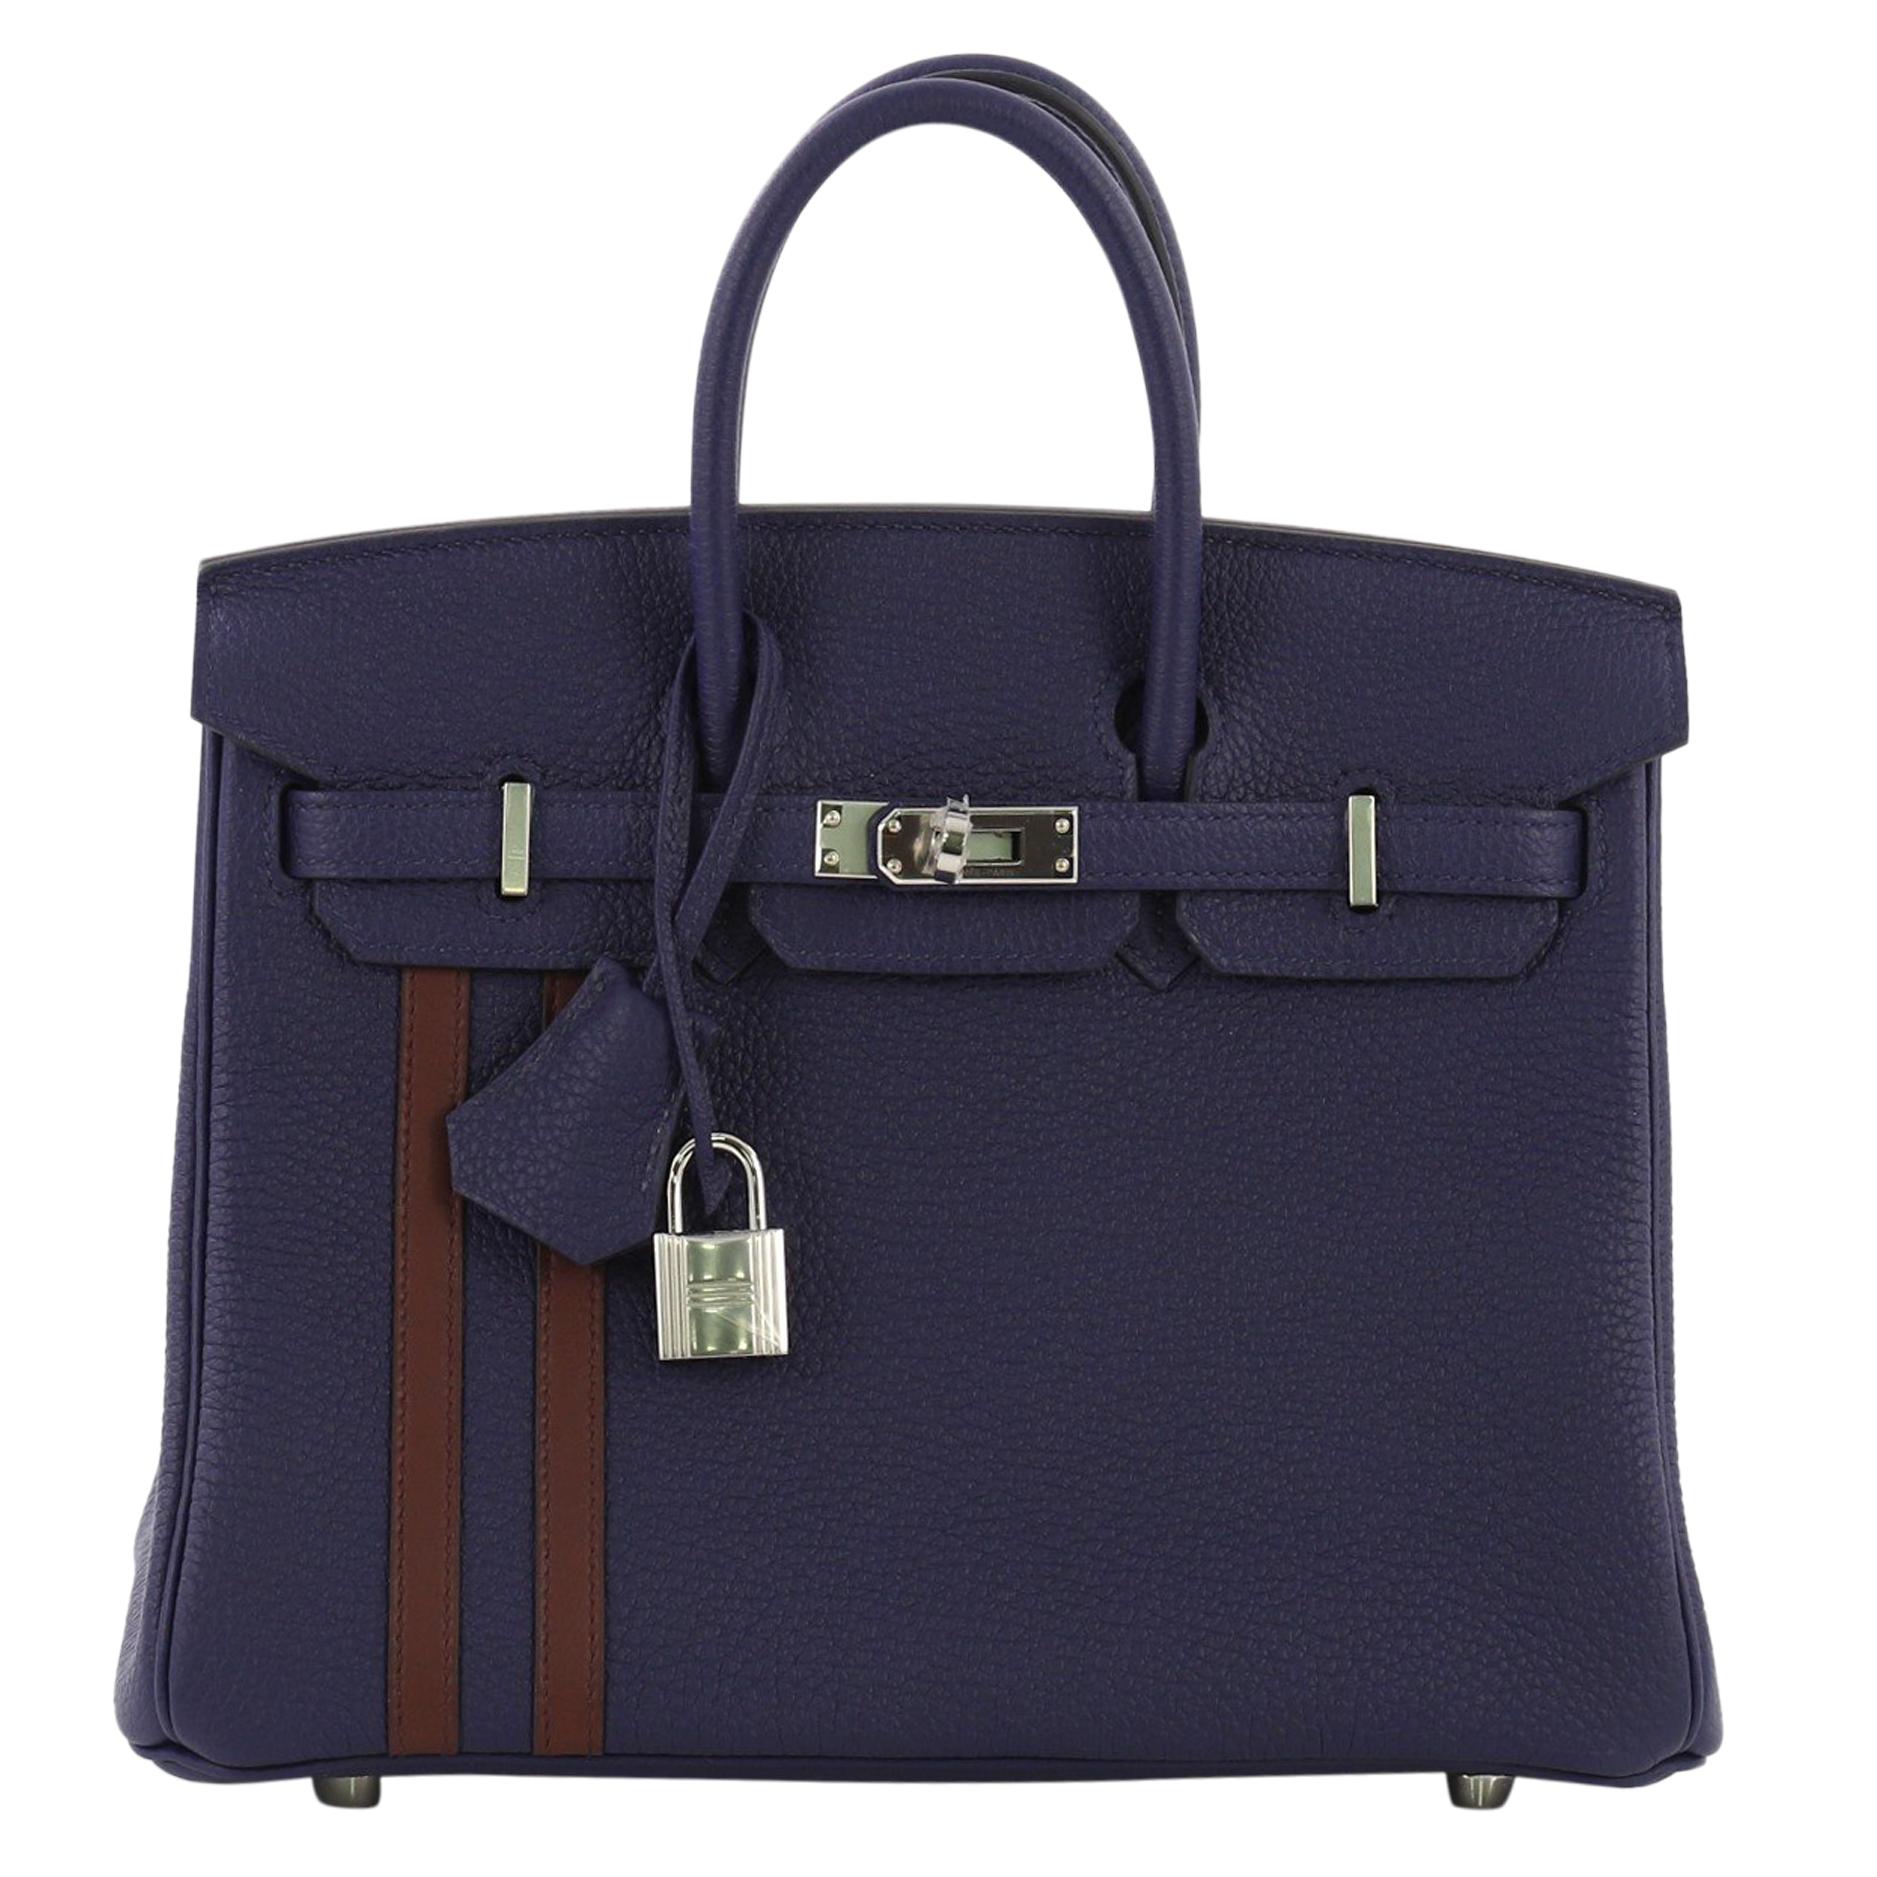 Hermes Officier Birkin Handbag Limited Edition Togo with Swift 30